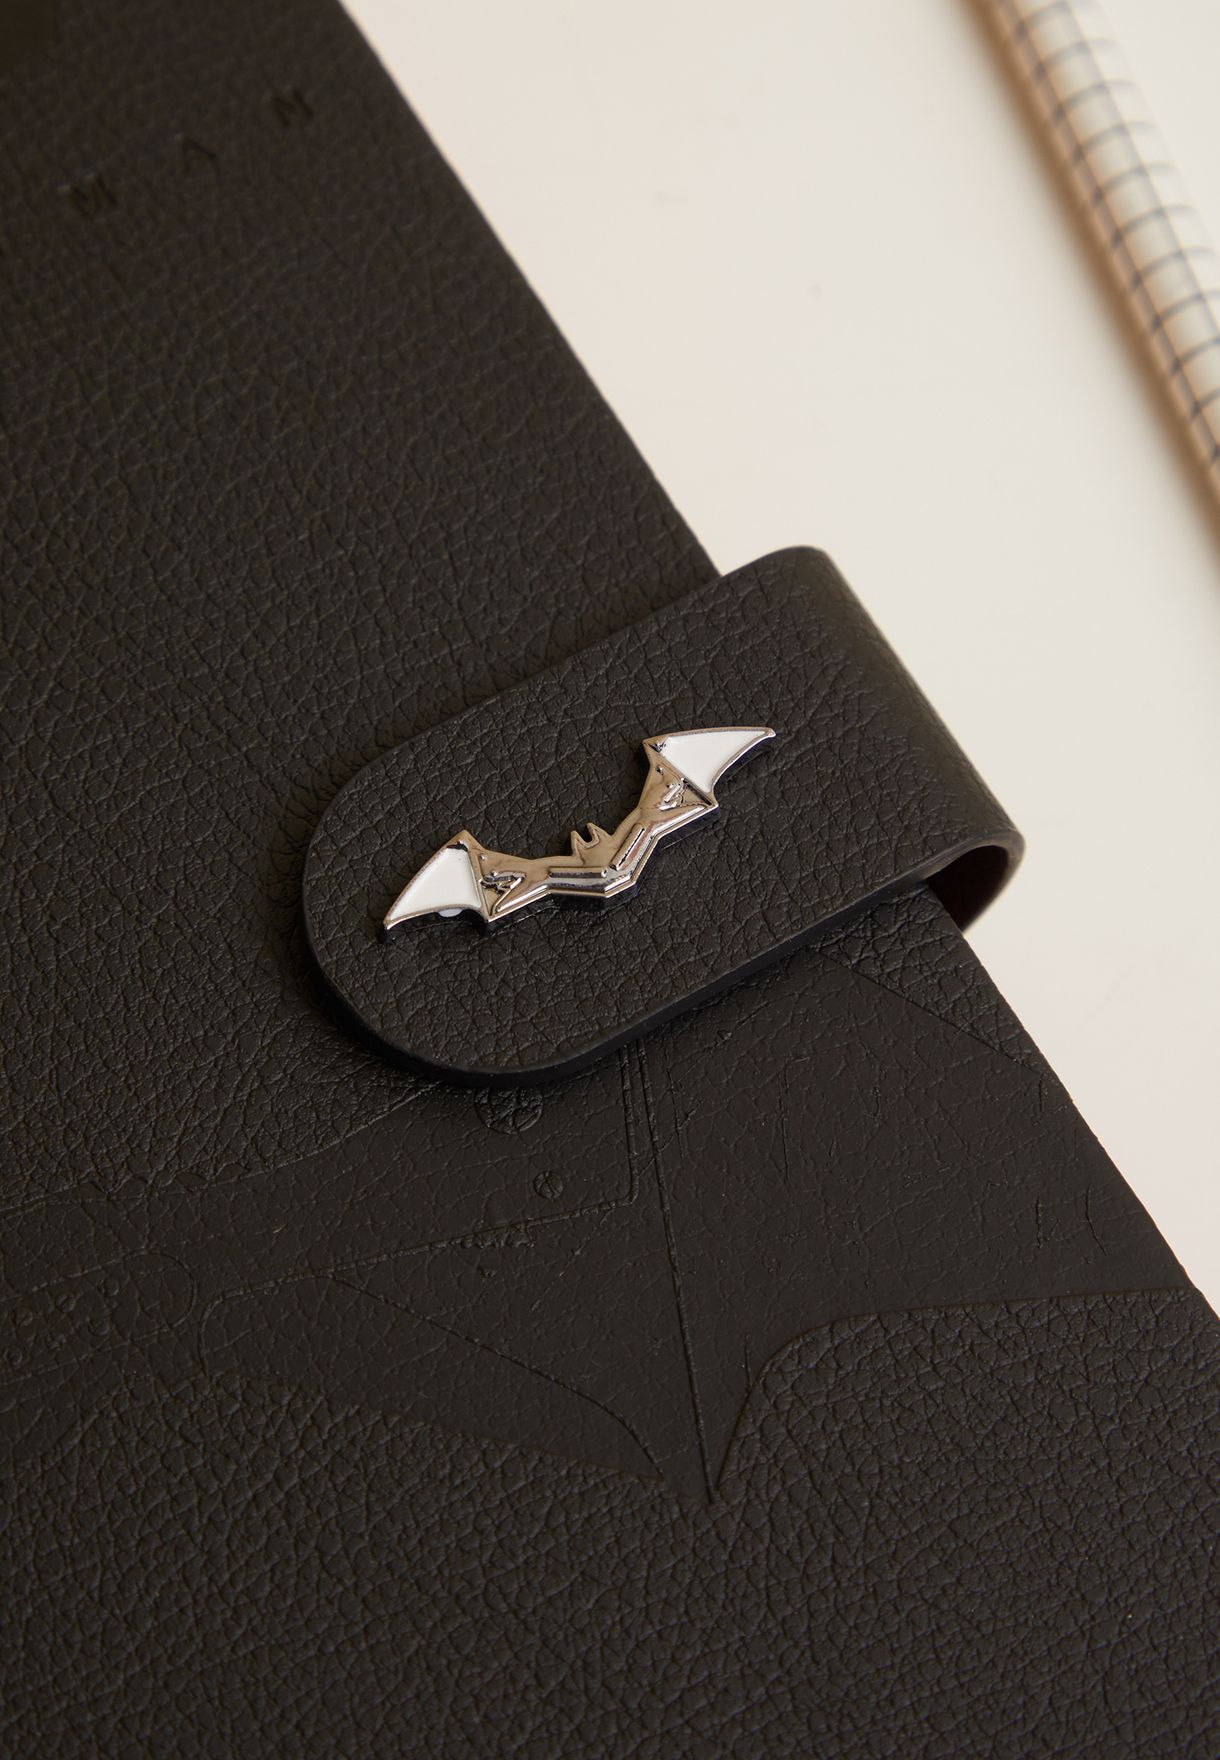 The Batman A5 Leather Premium Notebook